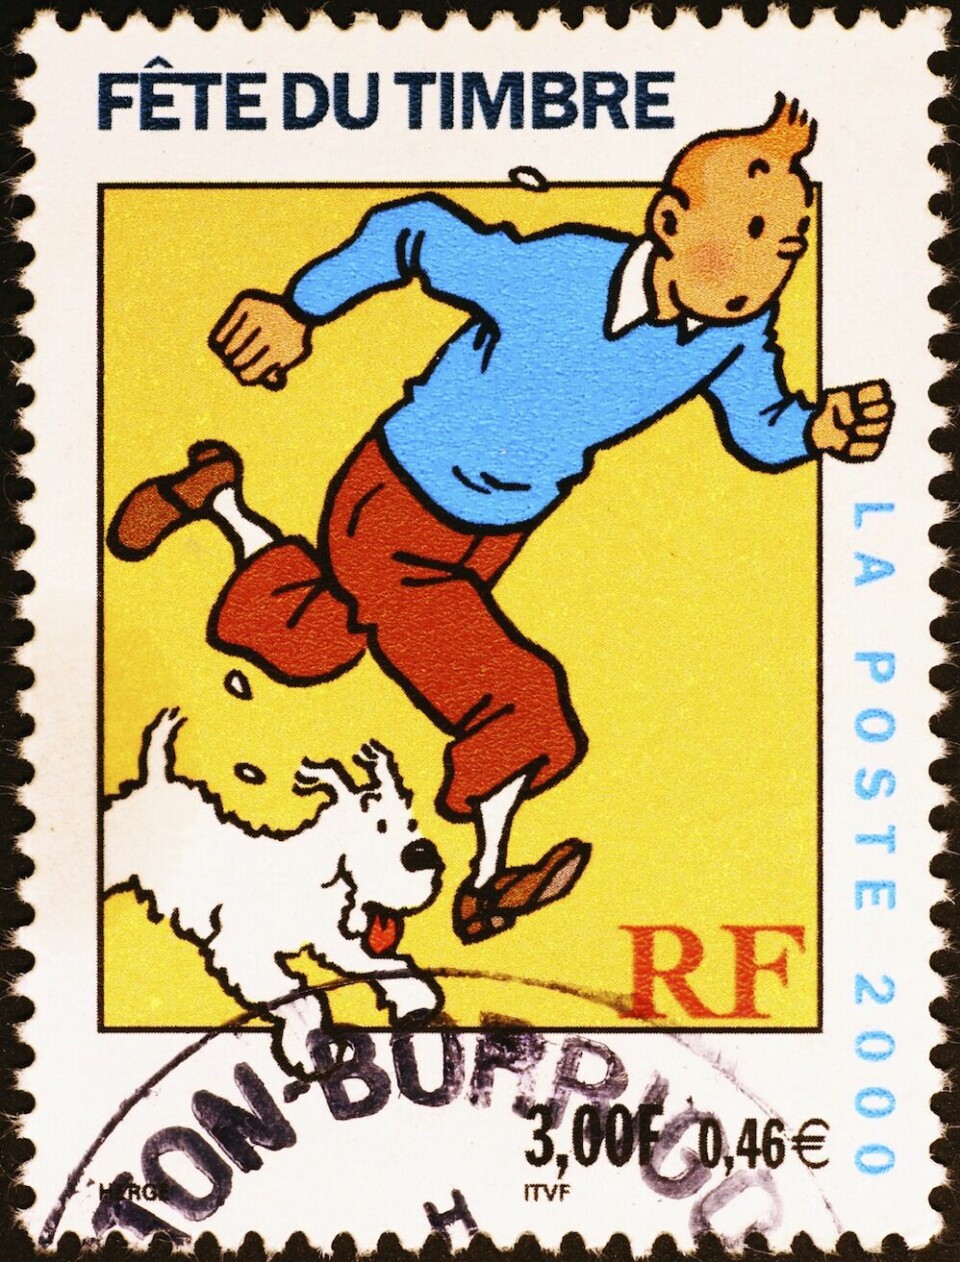 Seriefiguren Tintin och hunden Milou